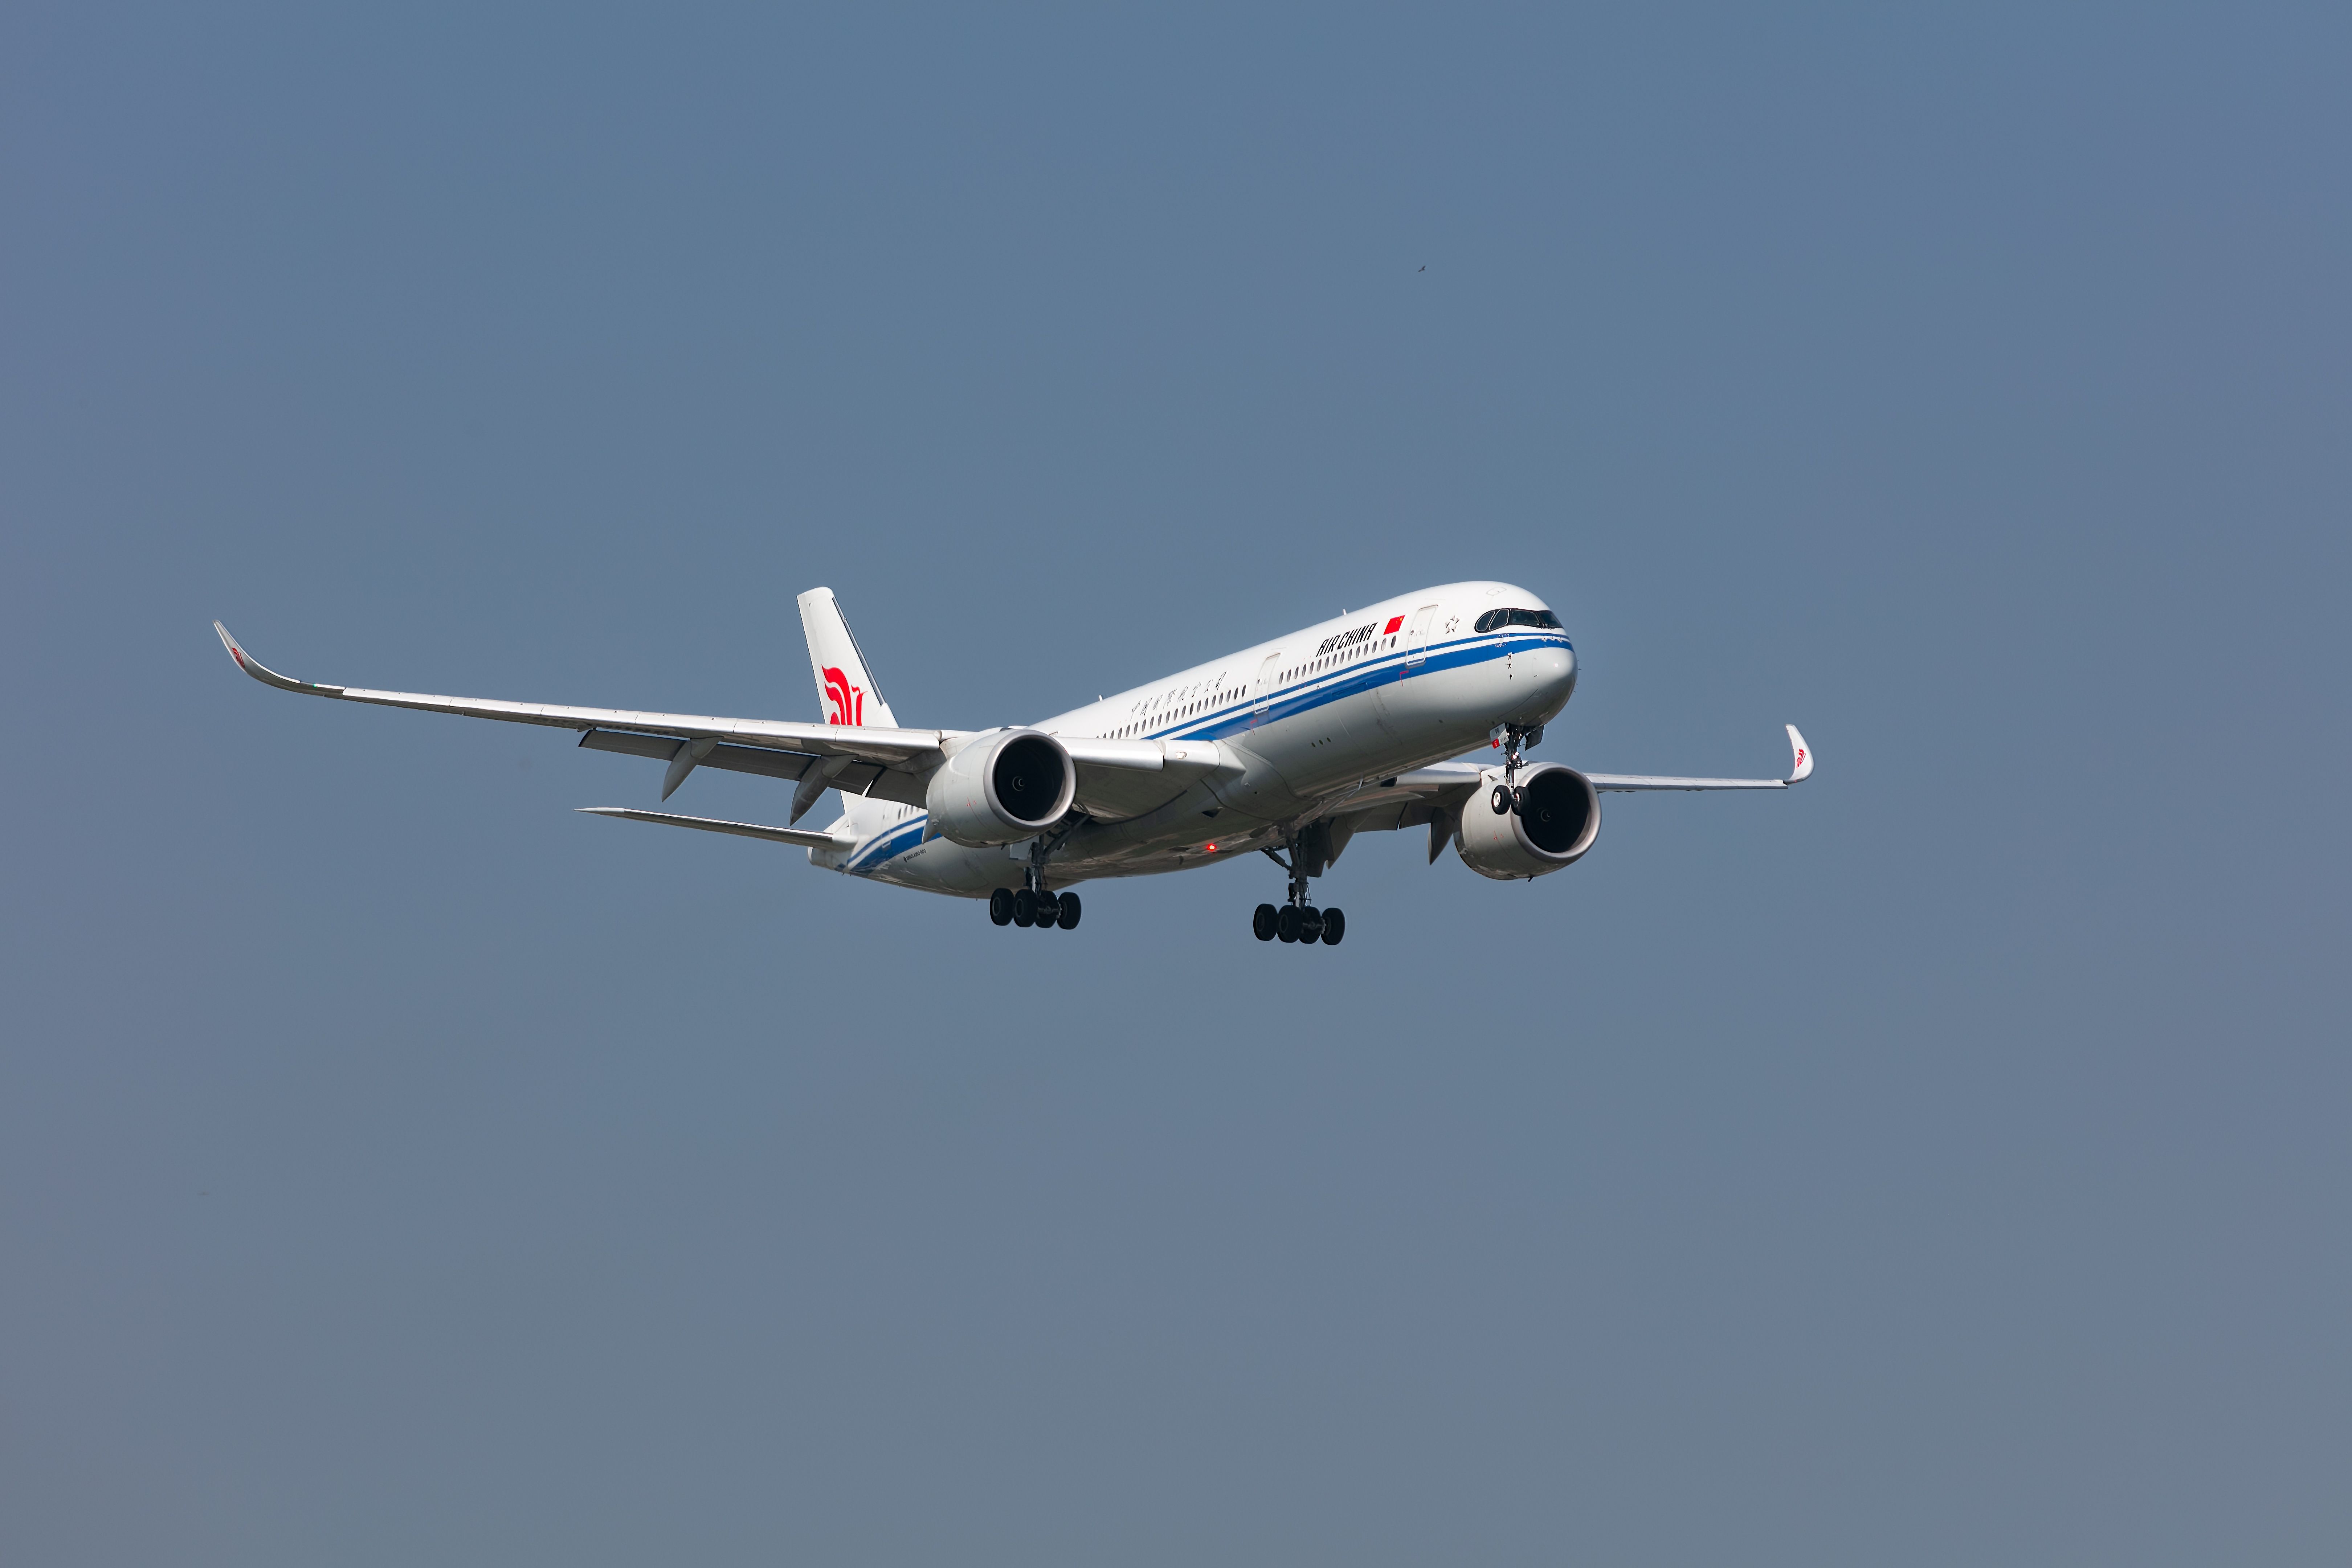 Air China Airbus A350 landing at London Heathrow Airport, April 2022